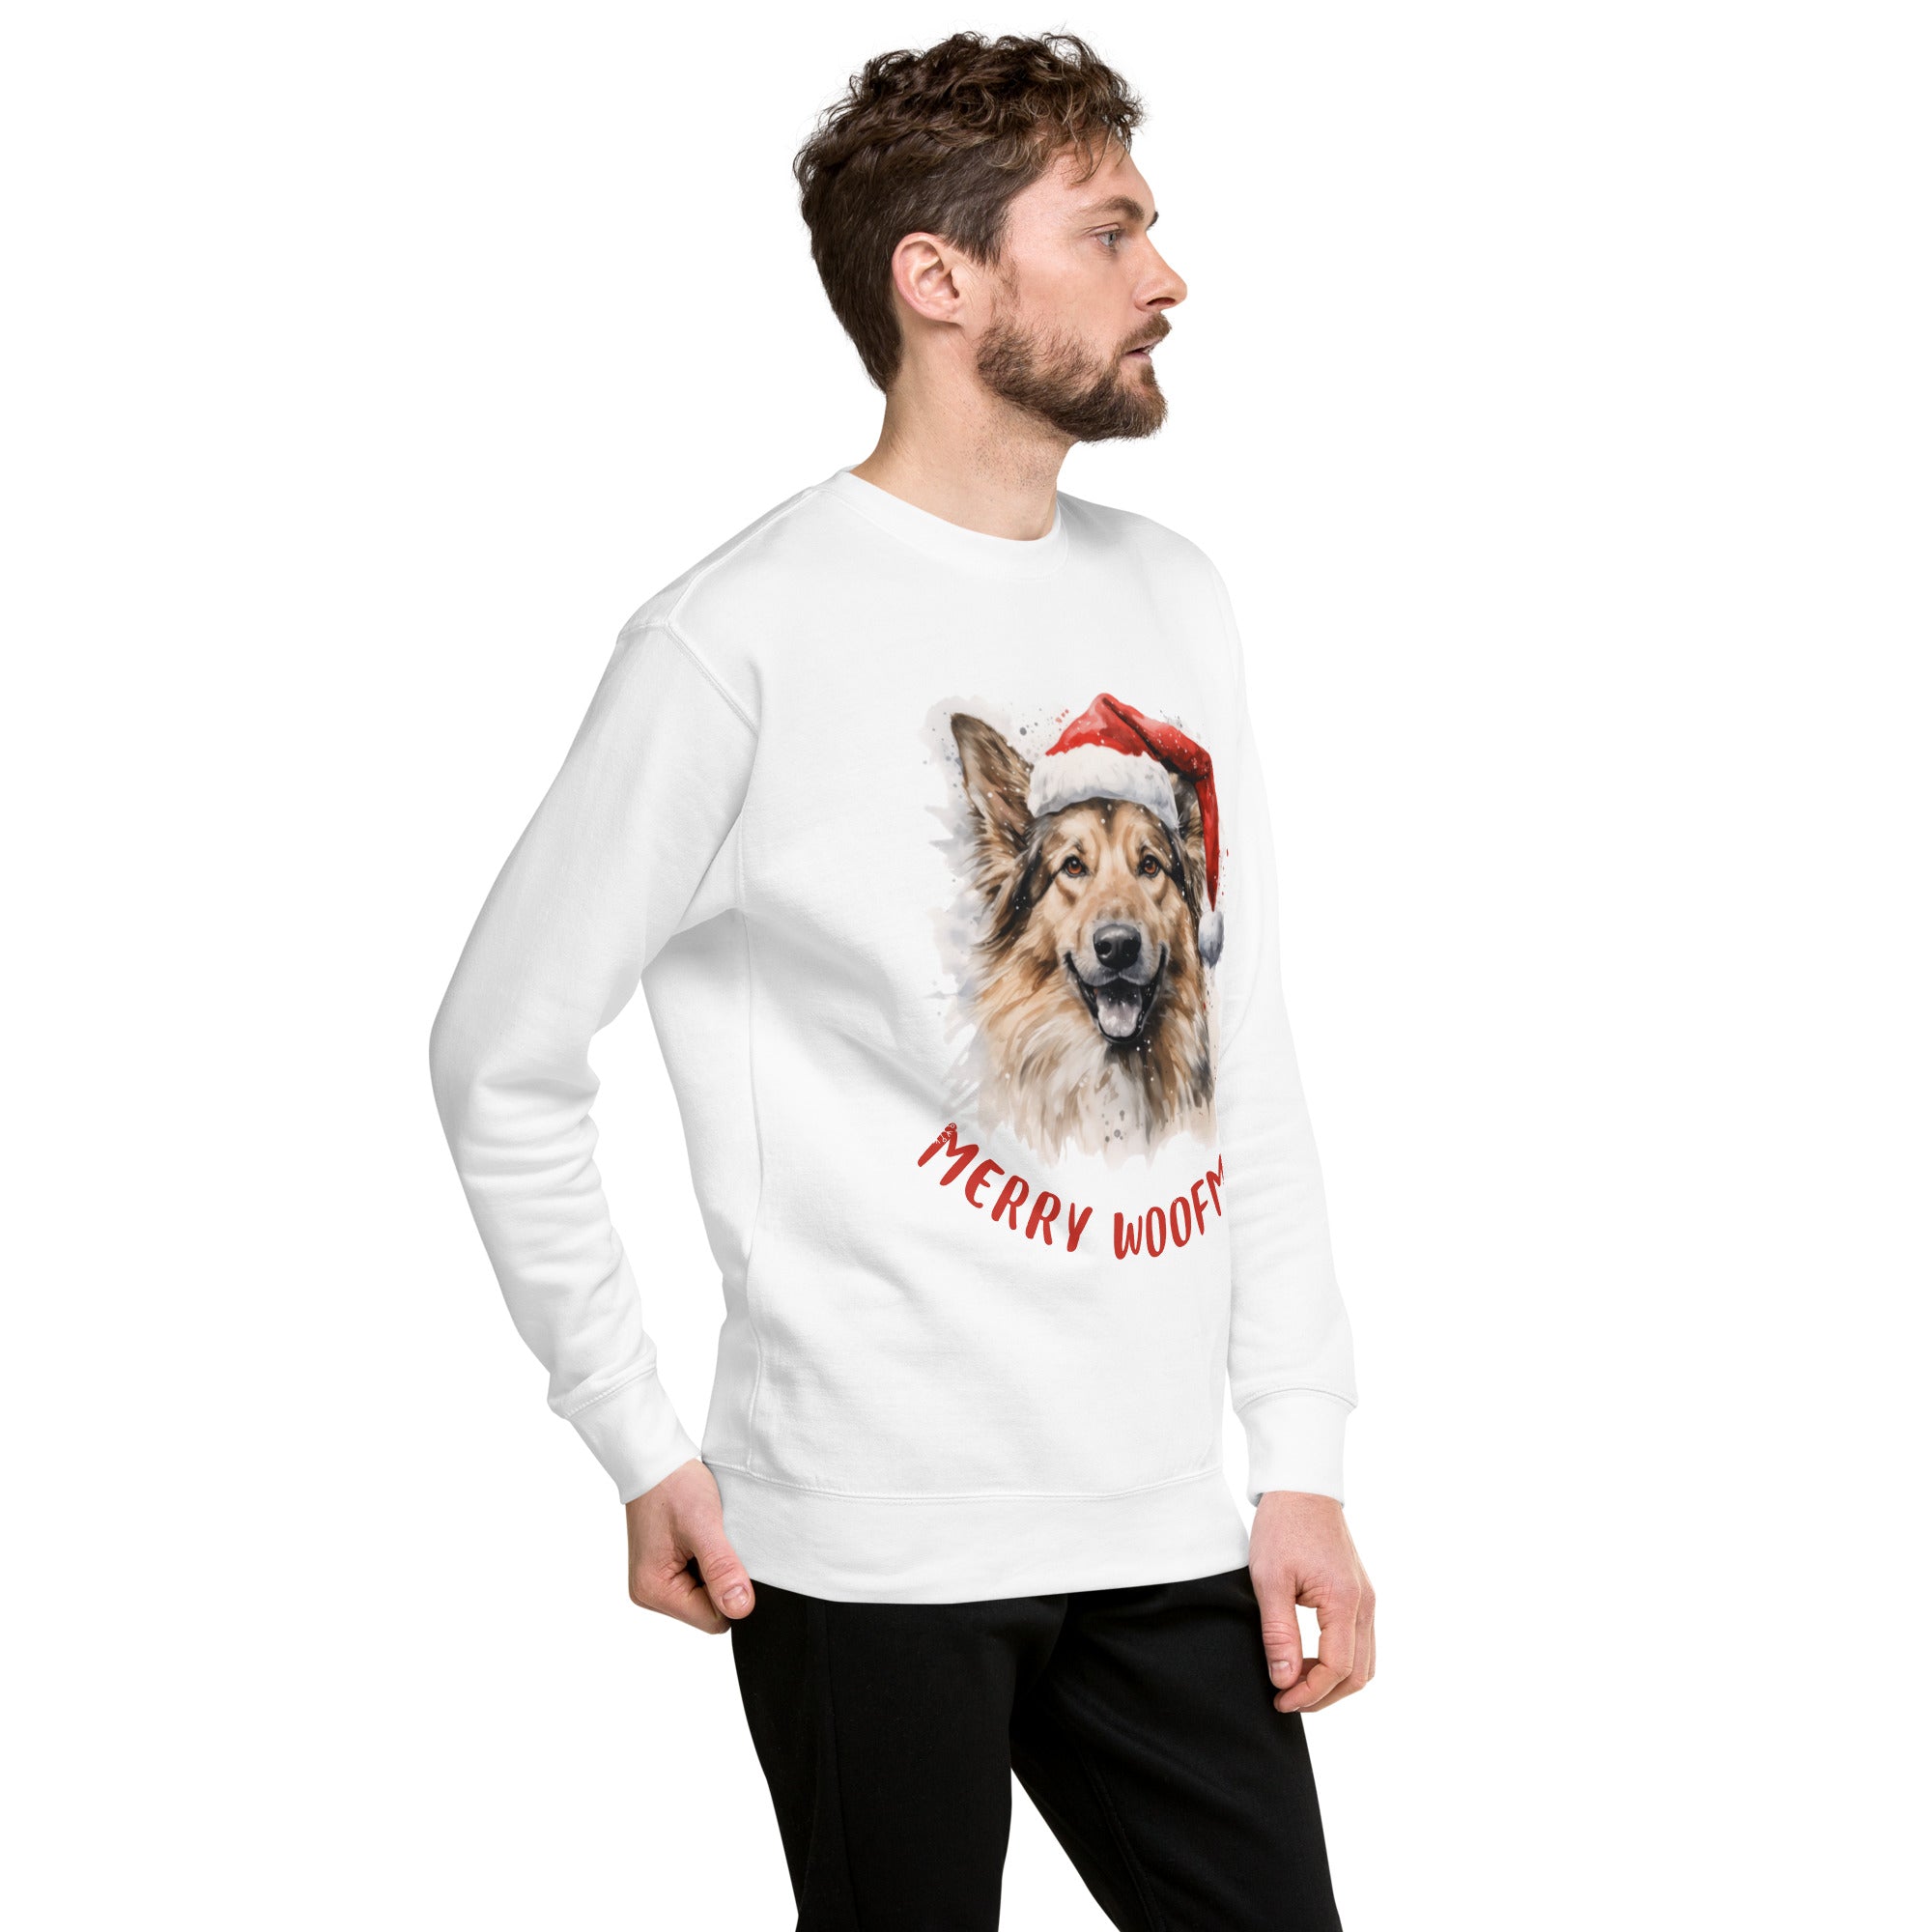 Unisex Premium Sweatshirt German Shepherd  - Merry Woofmas